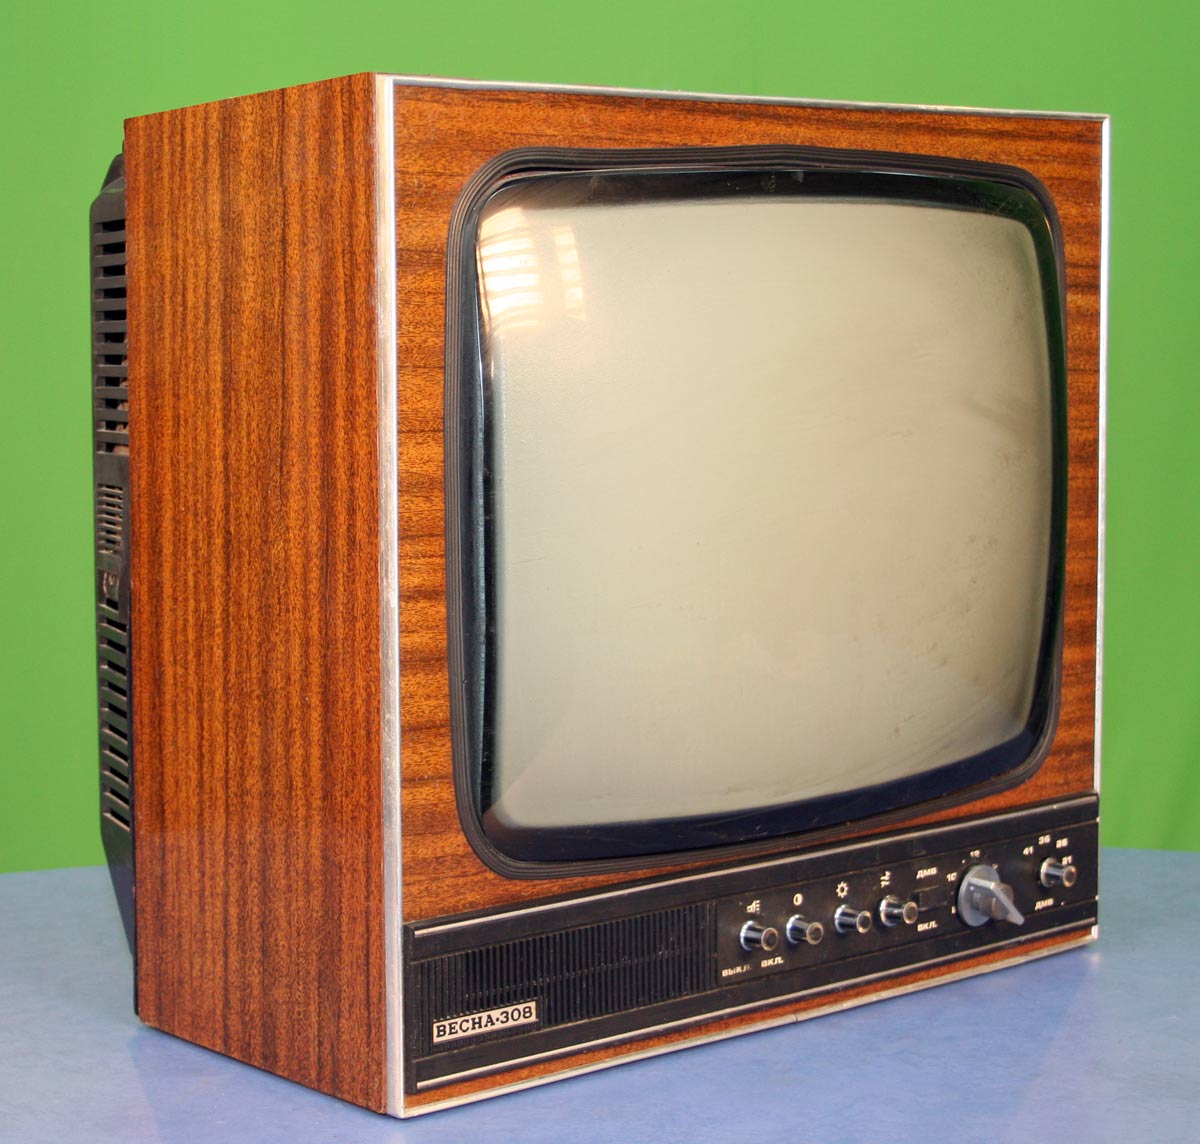 Телевизор 80 х. Фотон 51тц-408д. Ламповый телевизор Горизонт 736. Телевизор Фотон 51тц-408. Телевизор рекорд 51тц.